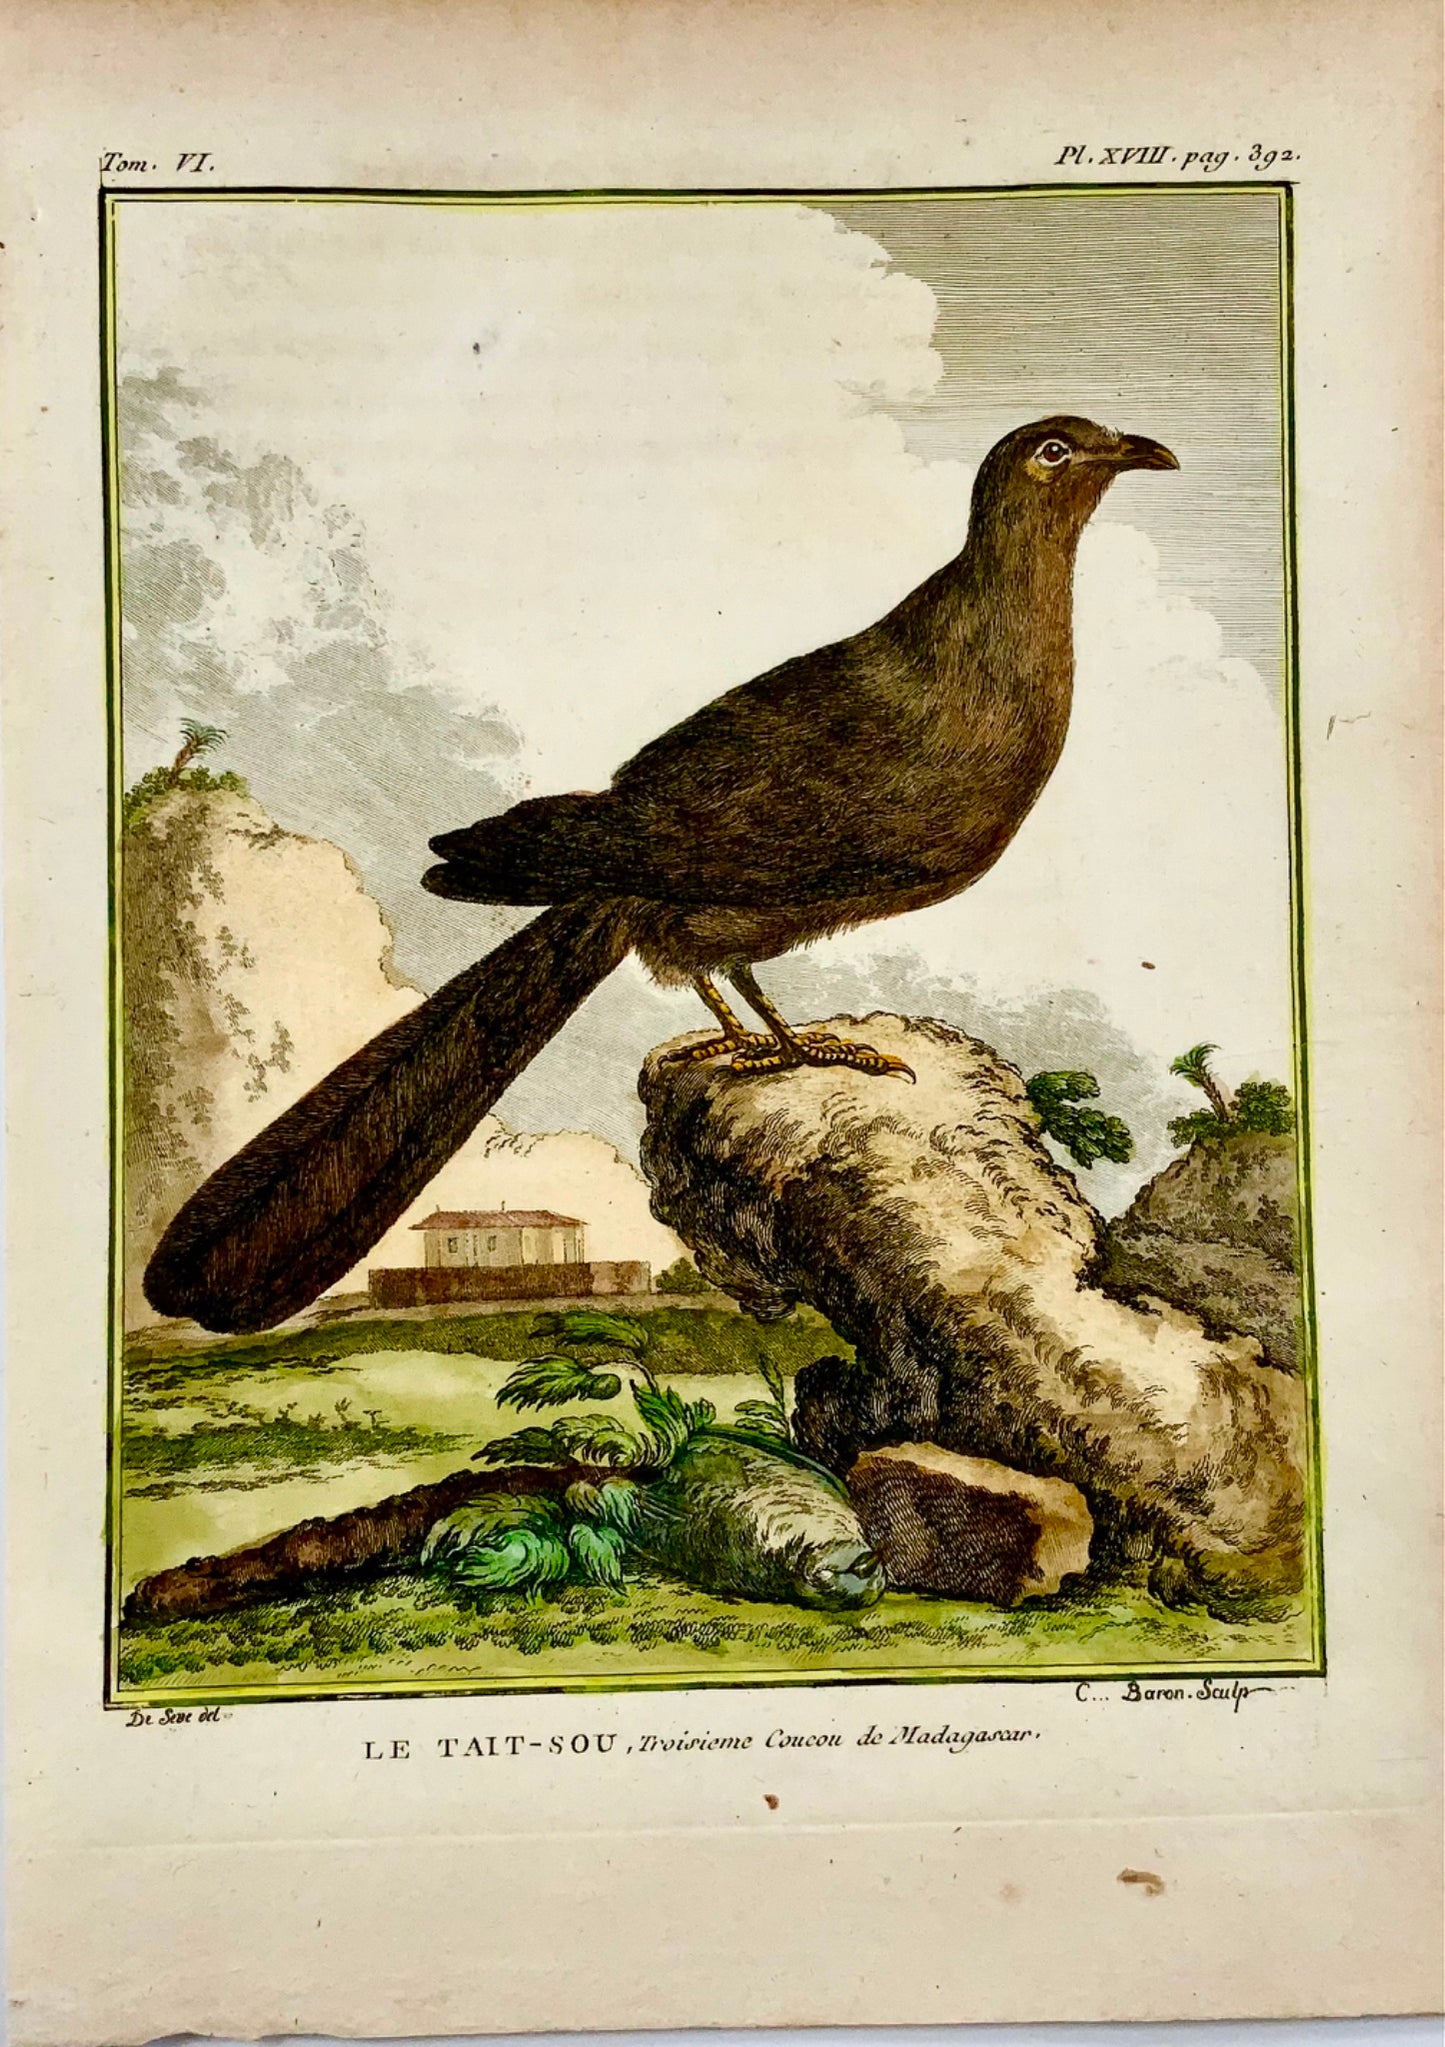 1779 de Seve - COUAS - Ornithology - 4to Large Edn engraving